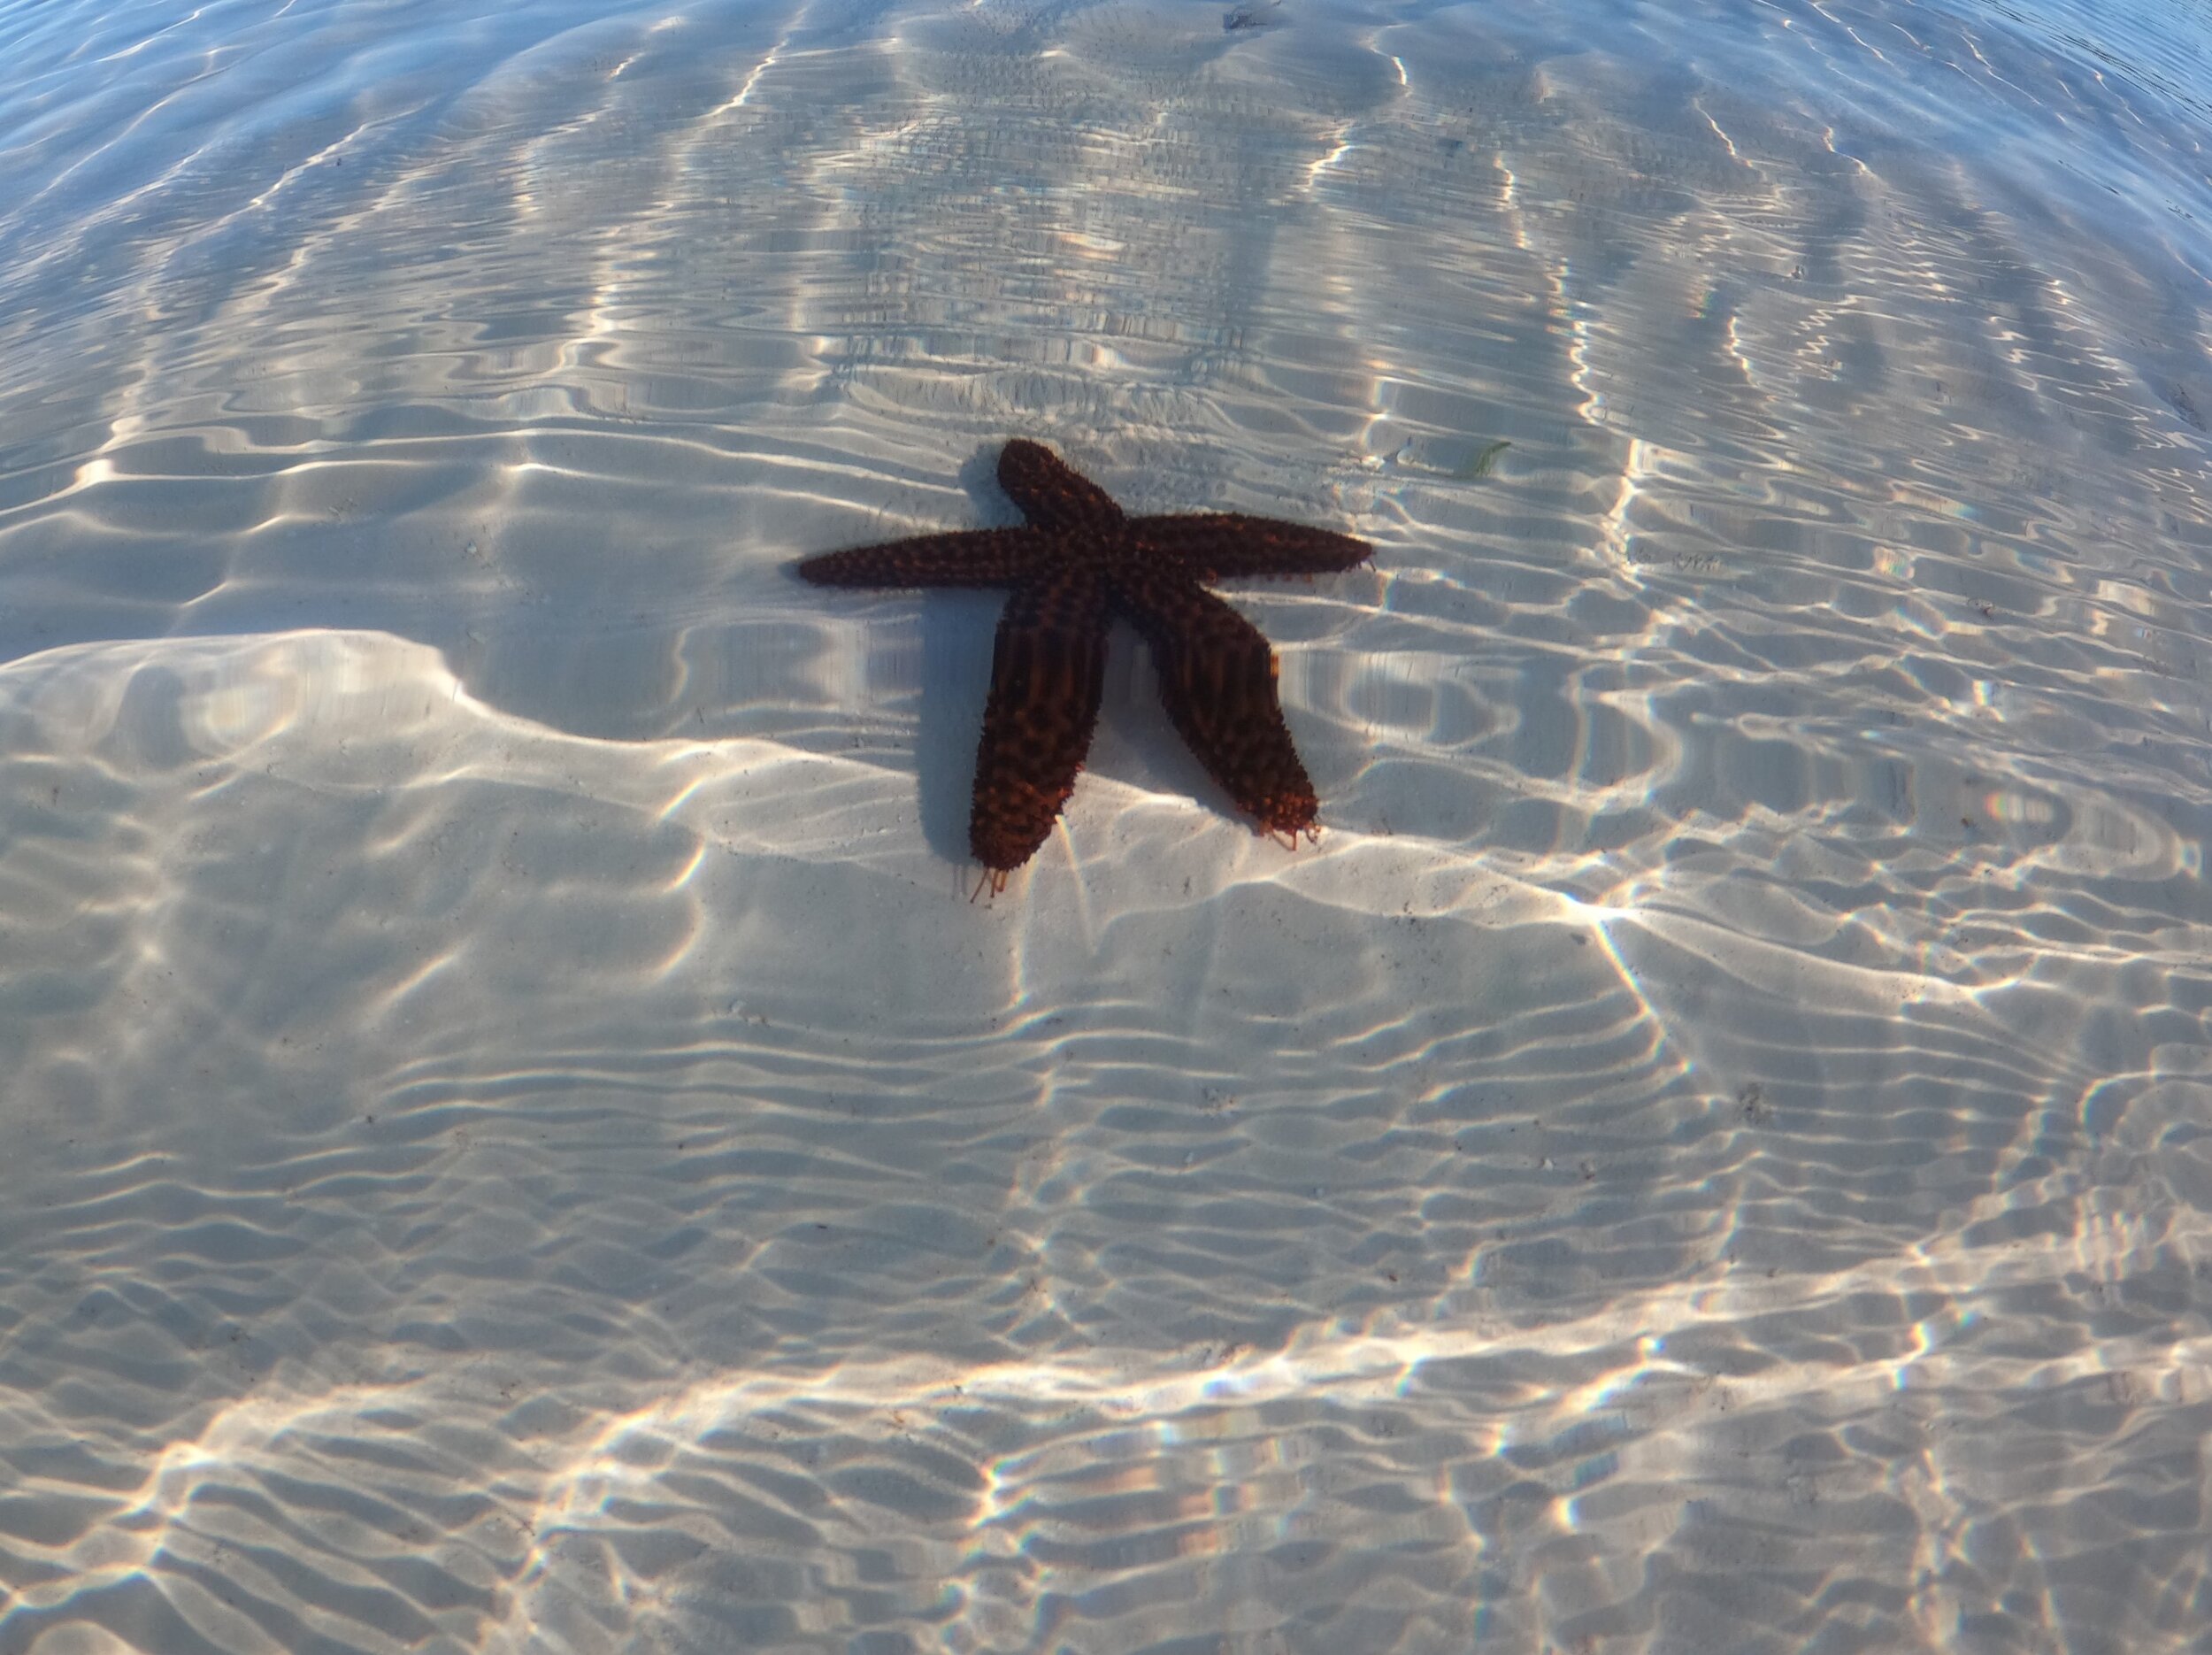 starfish Eleuthera Outdoor Center edit.jpg